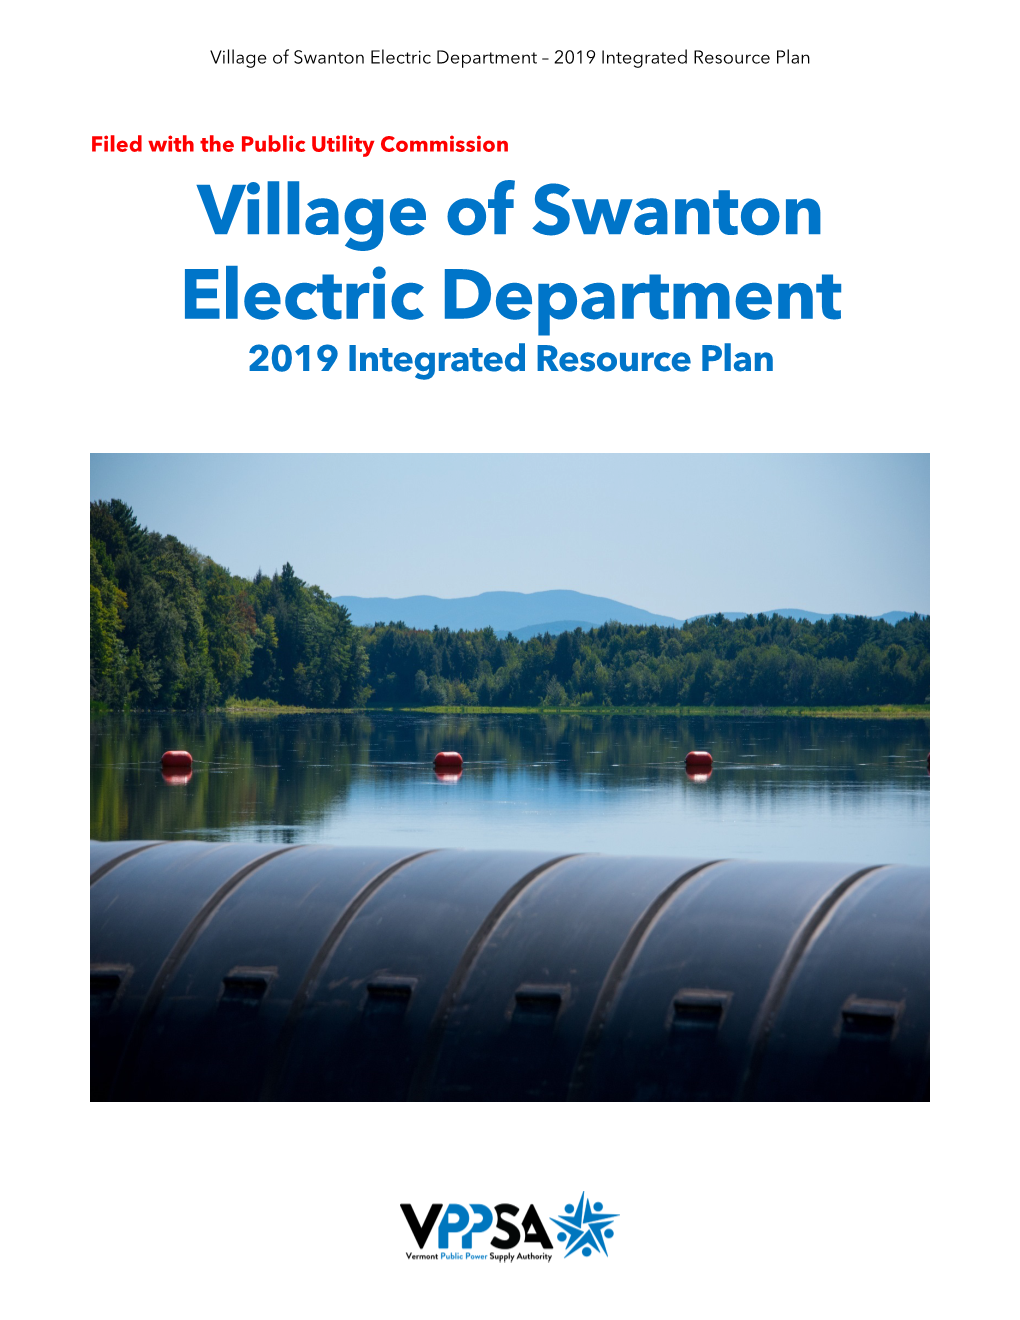 Swanton Integrated Resource Plan